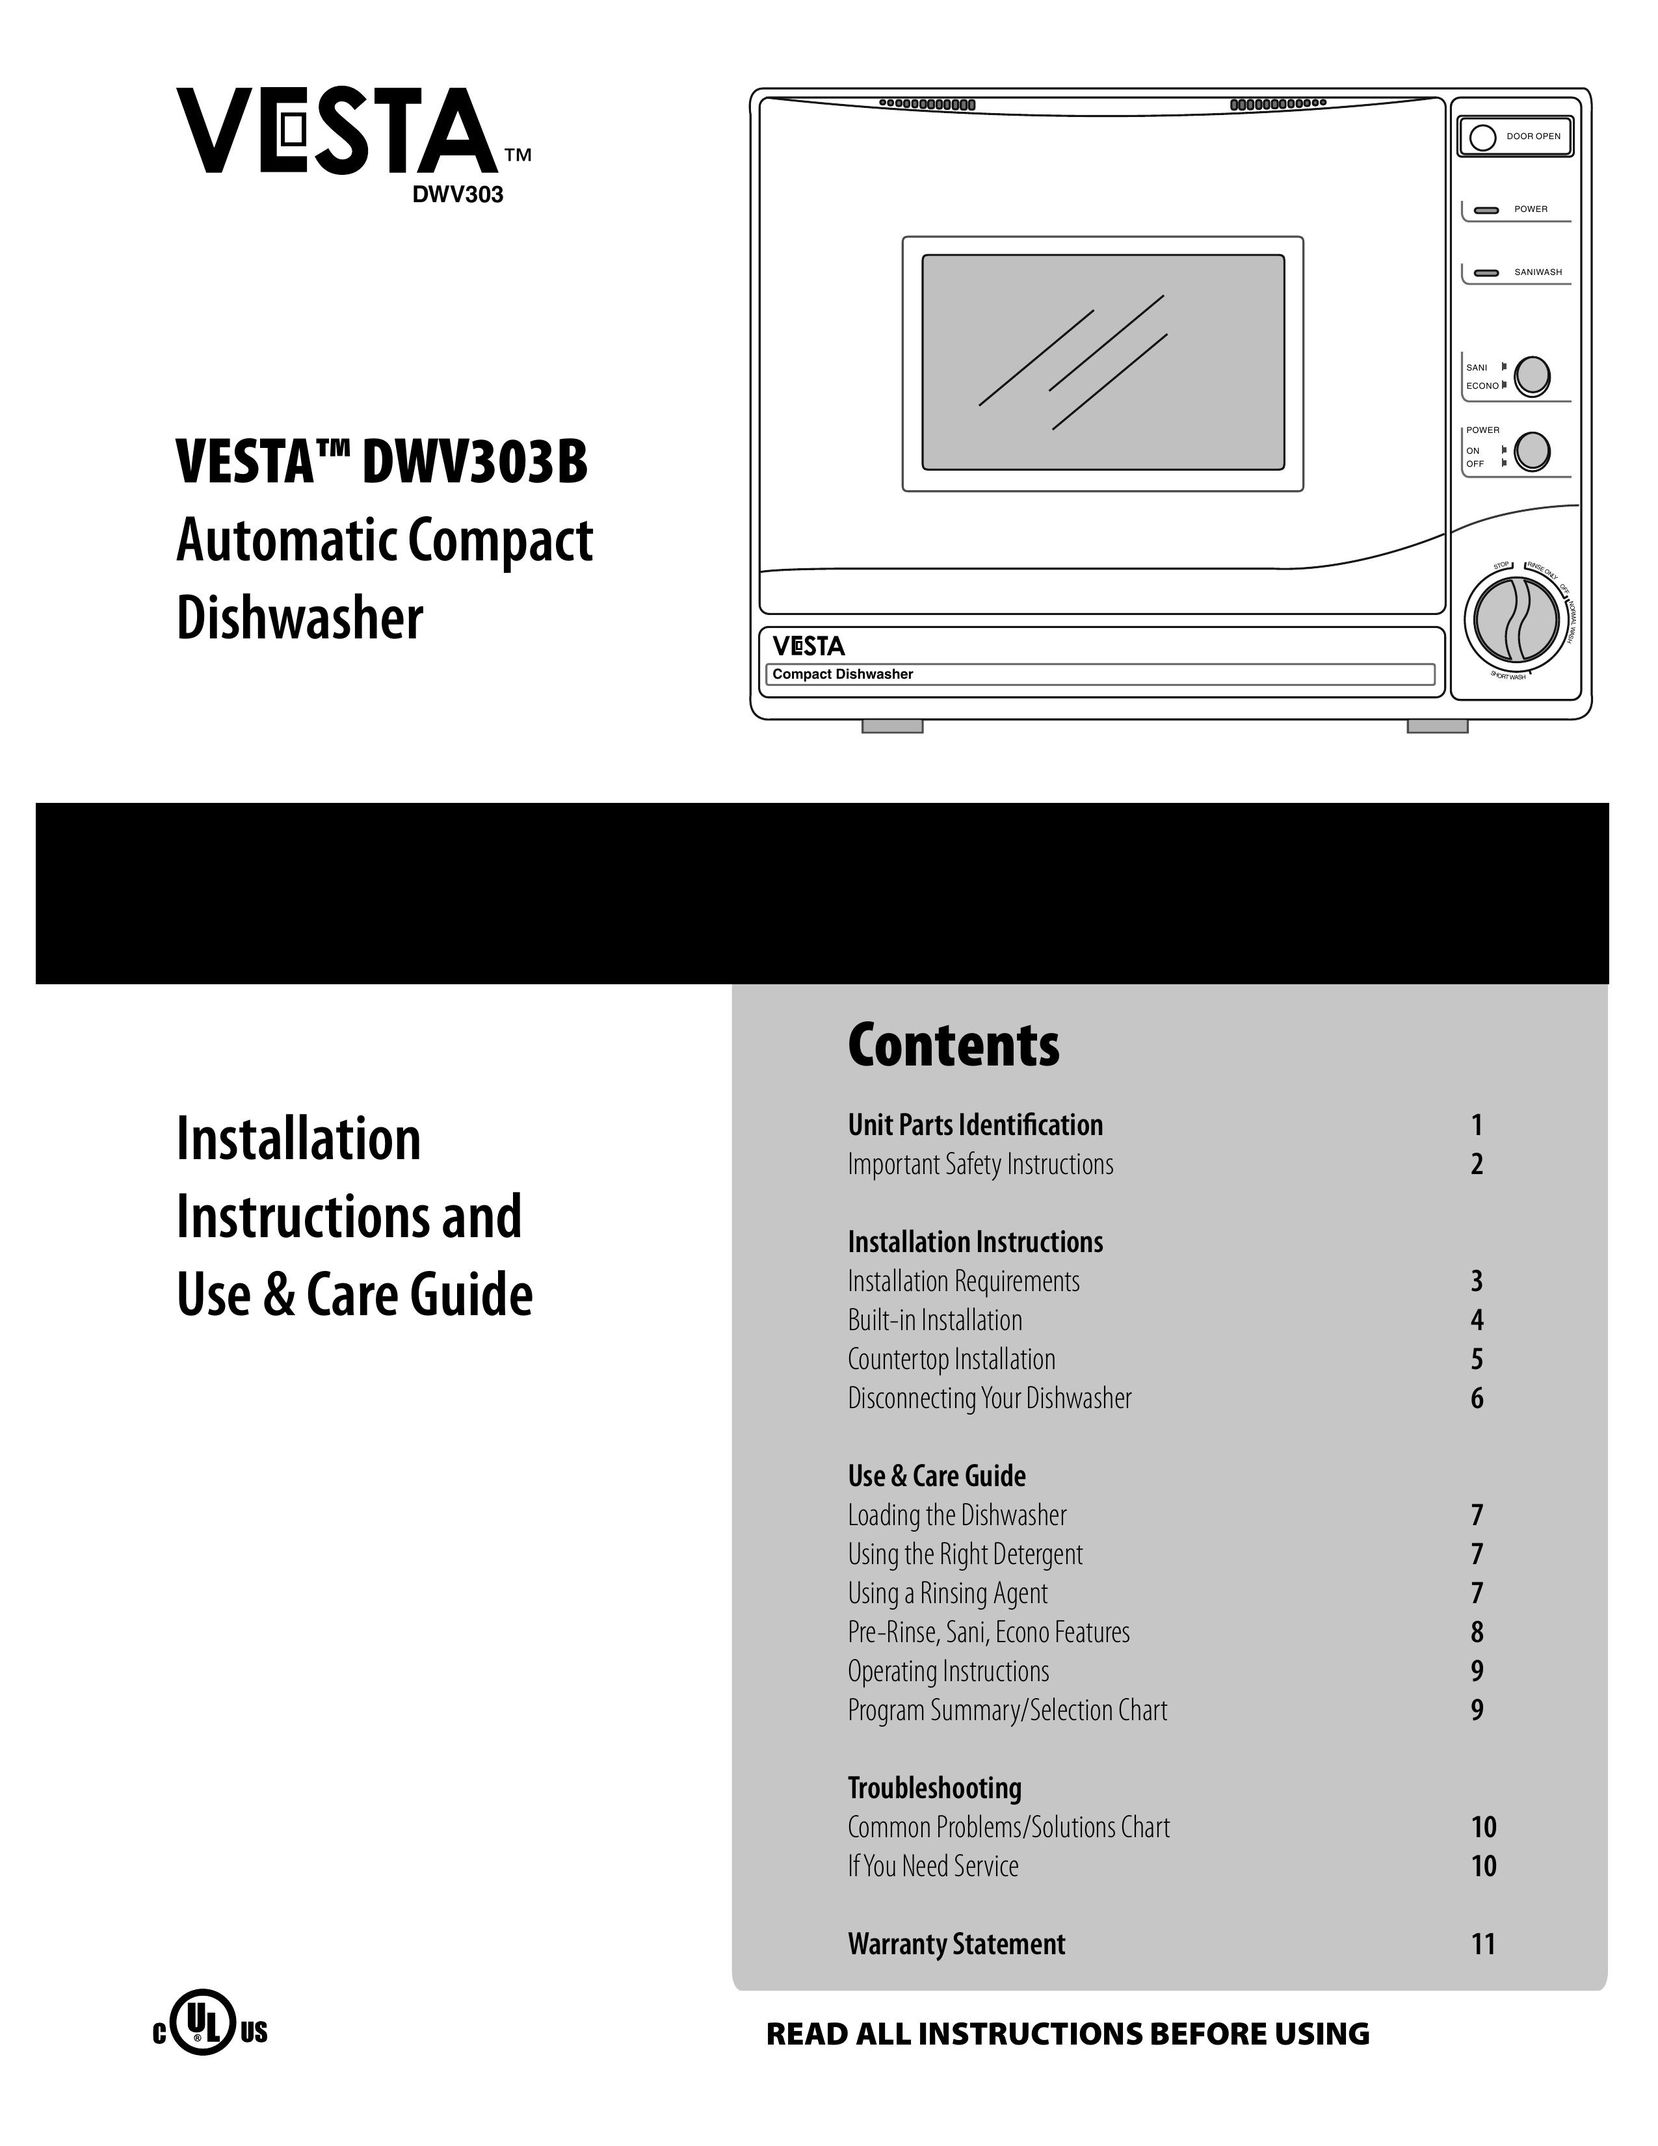 Westland Sales DWV303B Dishwasher User Manual